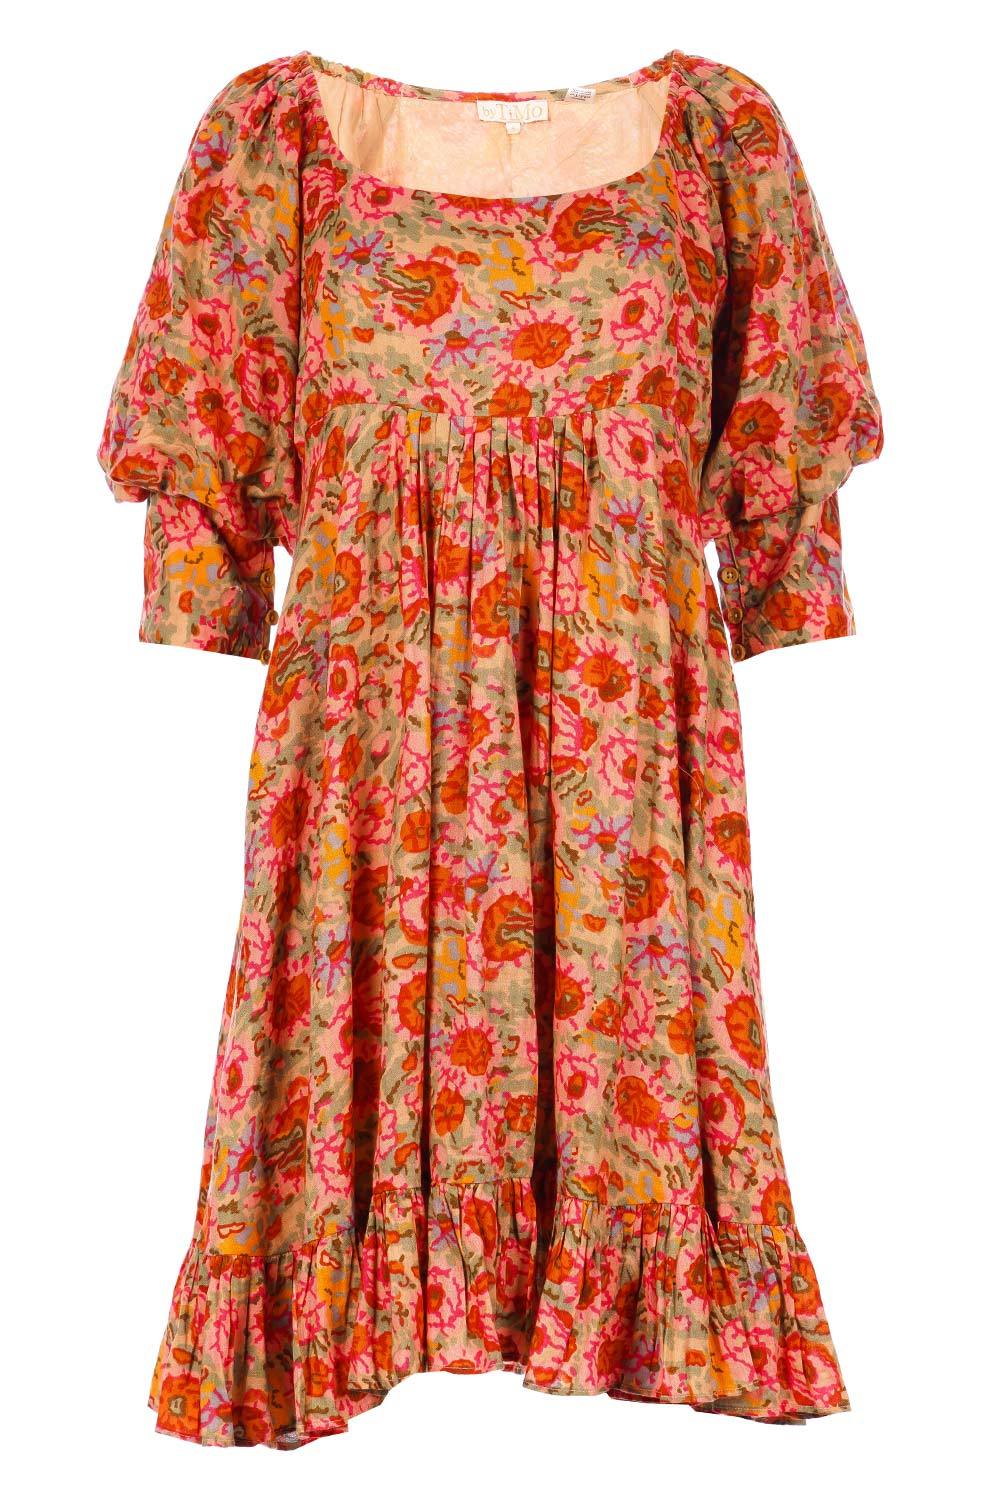 byTiMo Bright Field Spring Babydoll Mini Dress